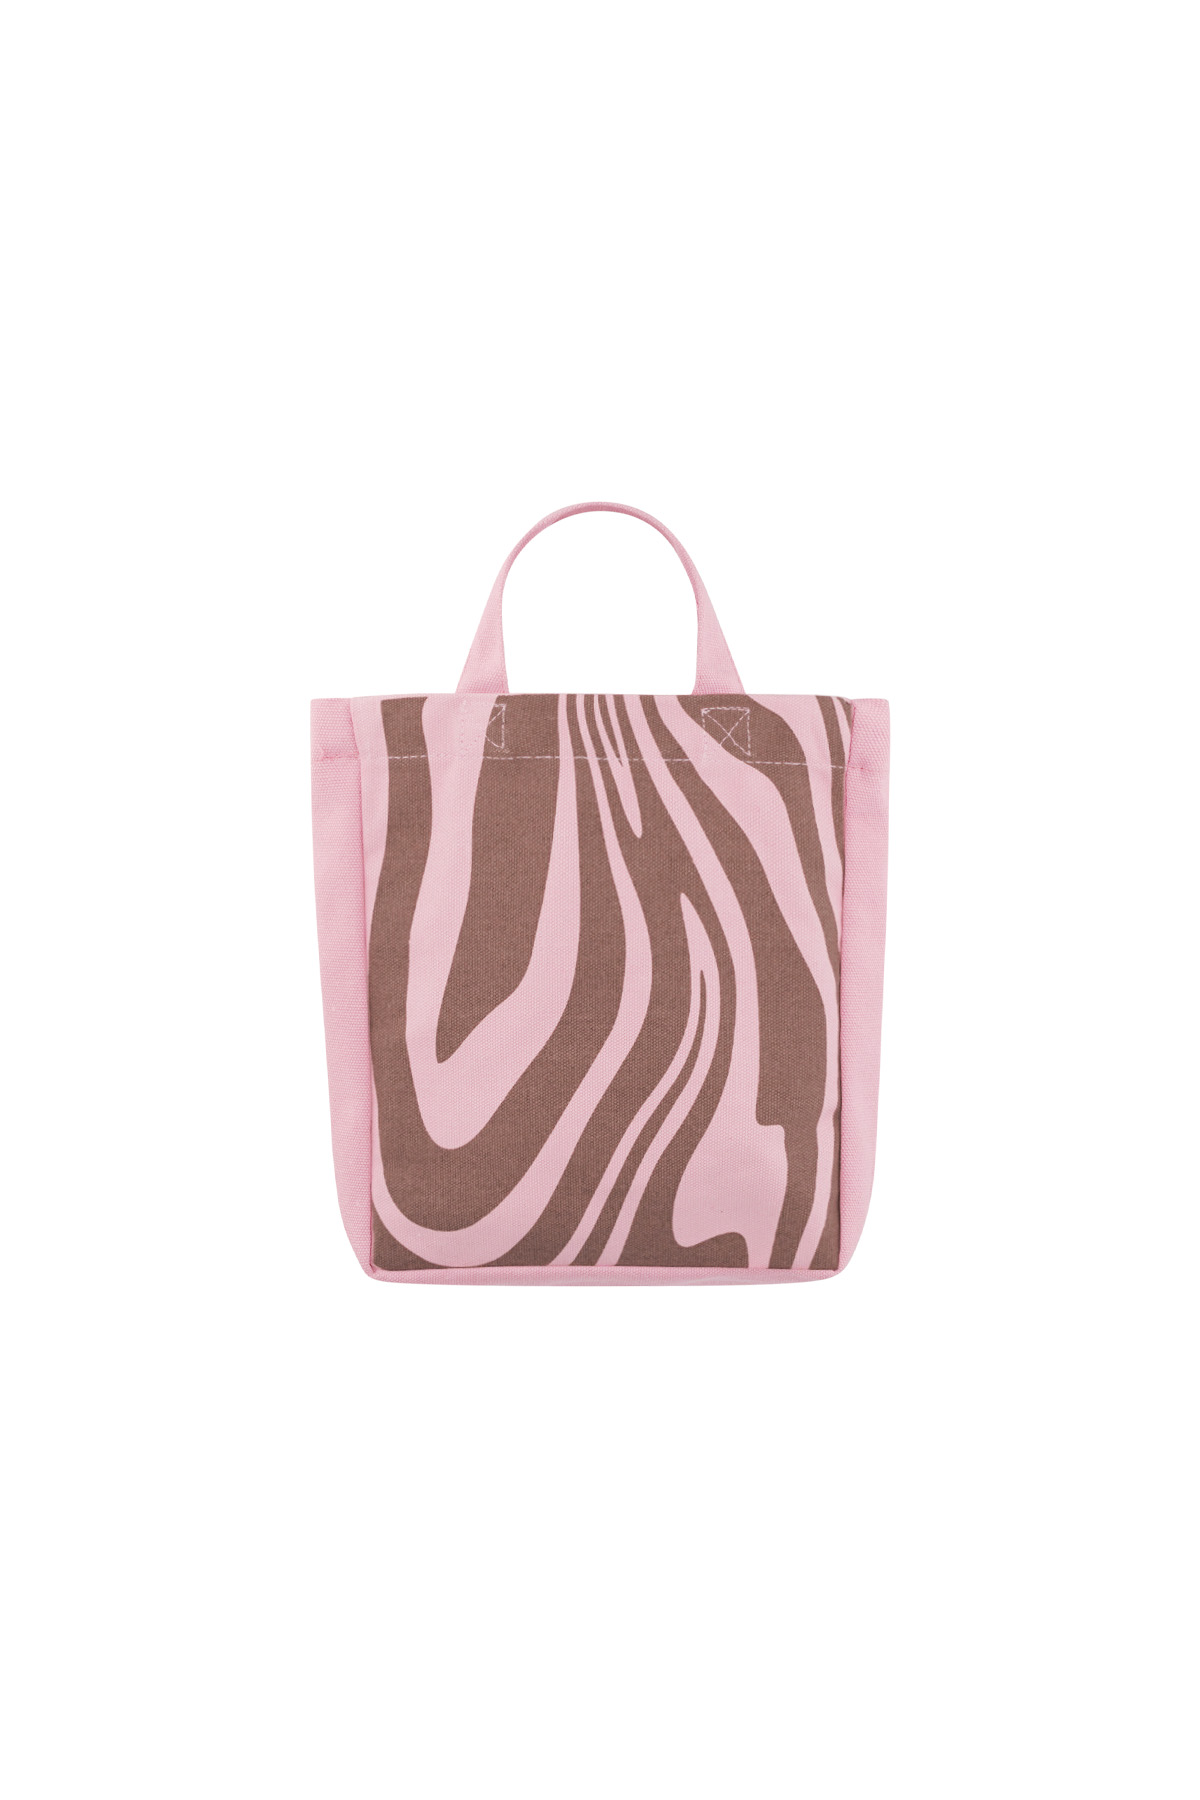 Small canvas bag zebra - pink brown